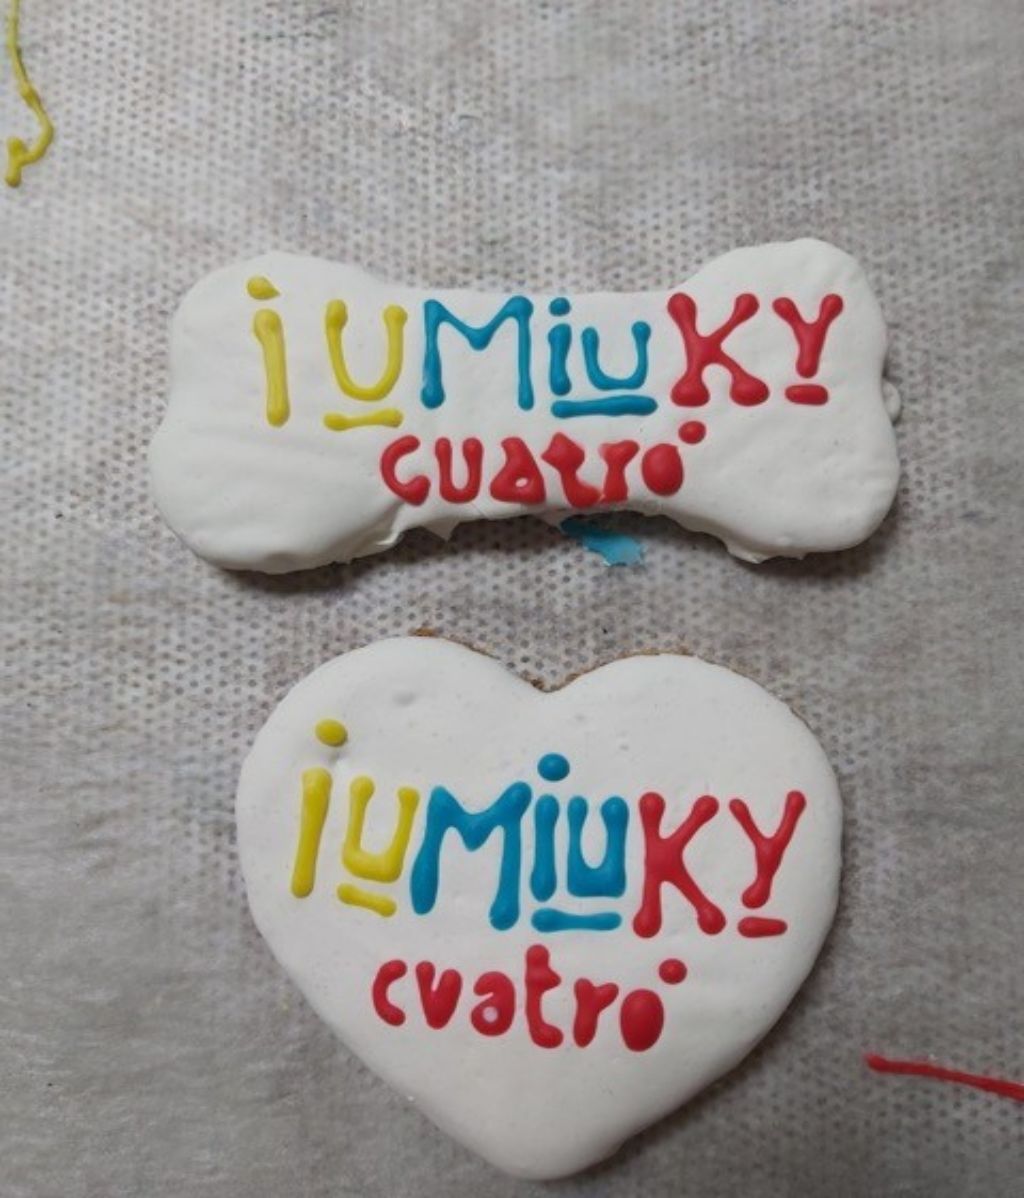 Galleta logo iumiuky -Miguitas-